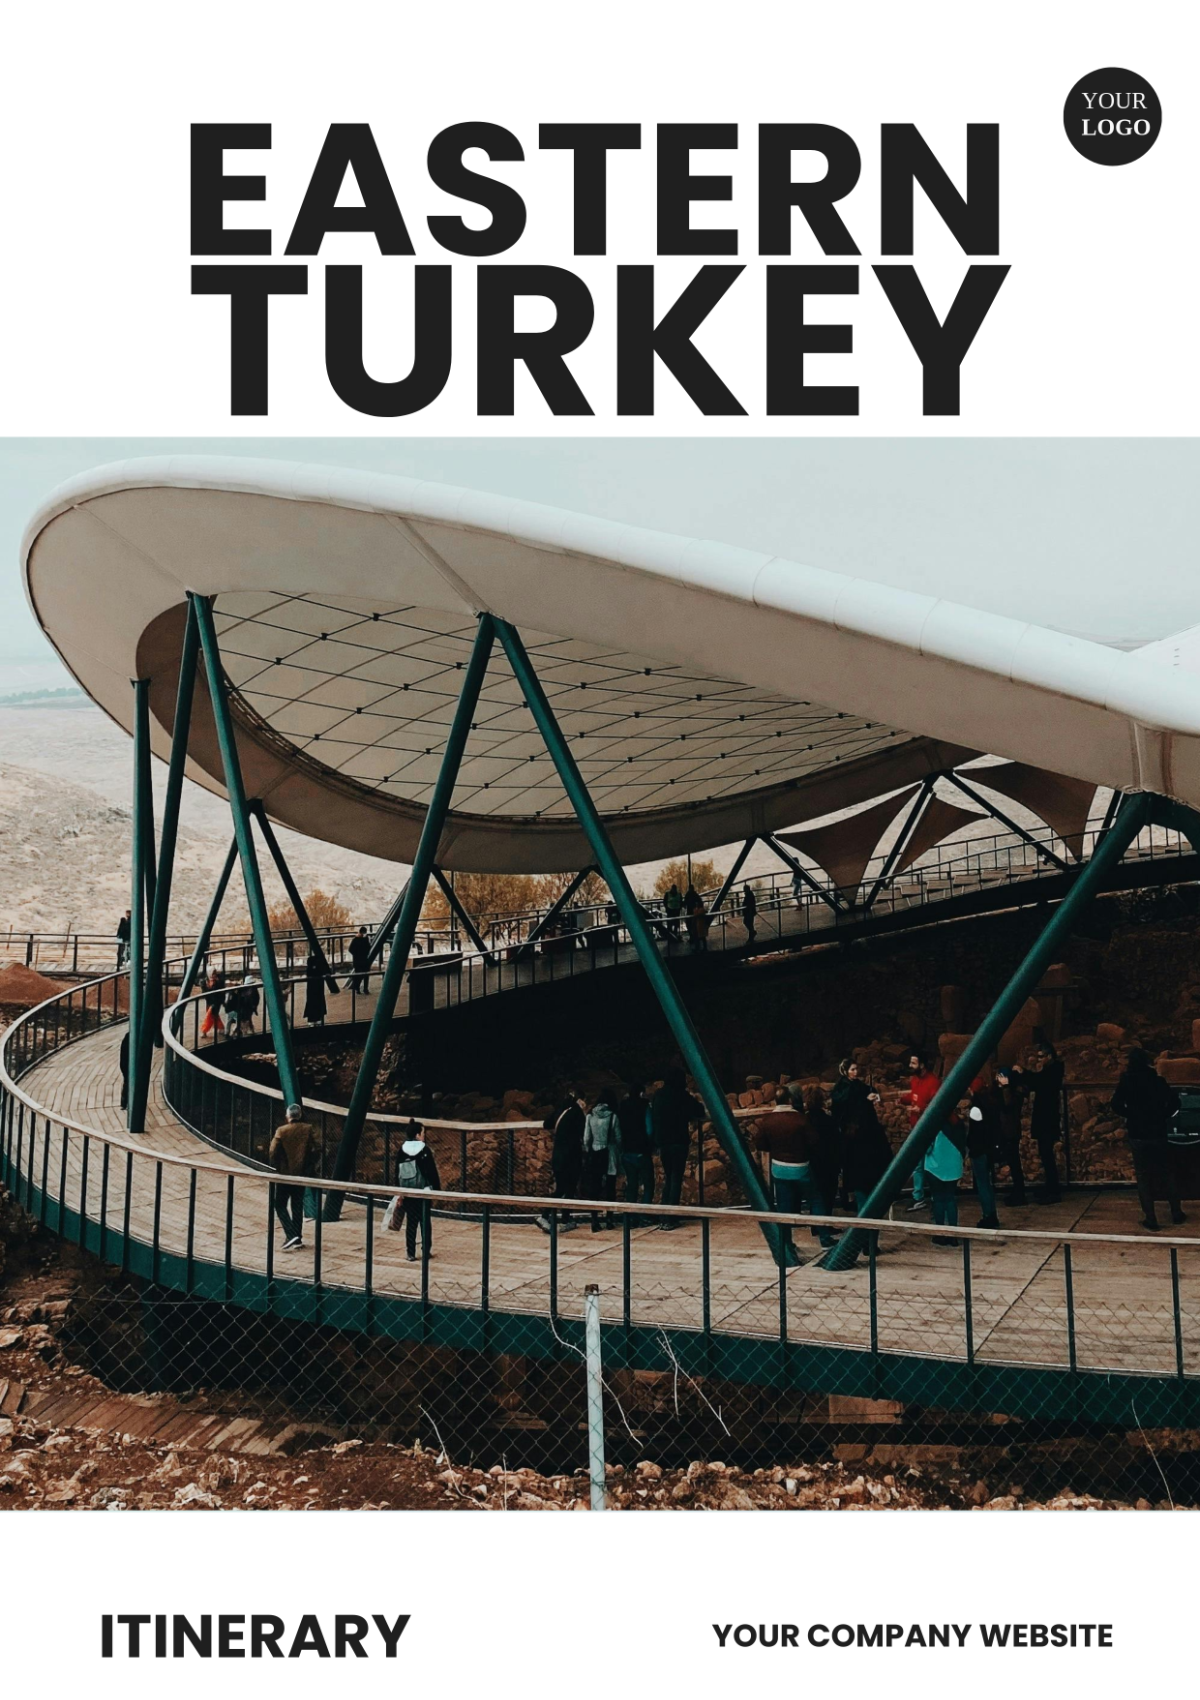 Eastern Turkey Itinerary Template